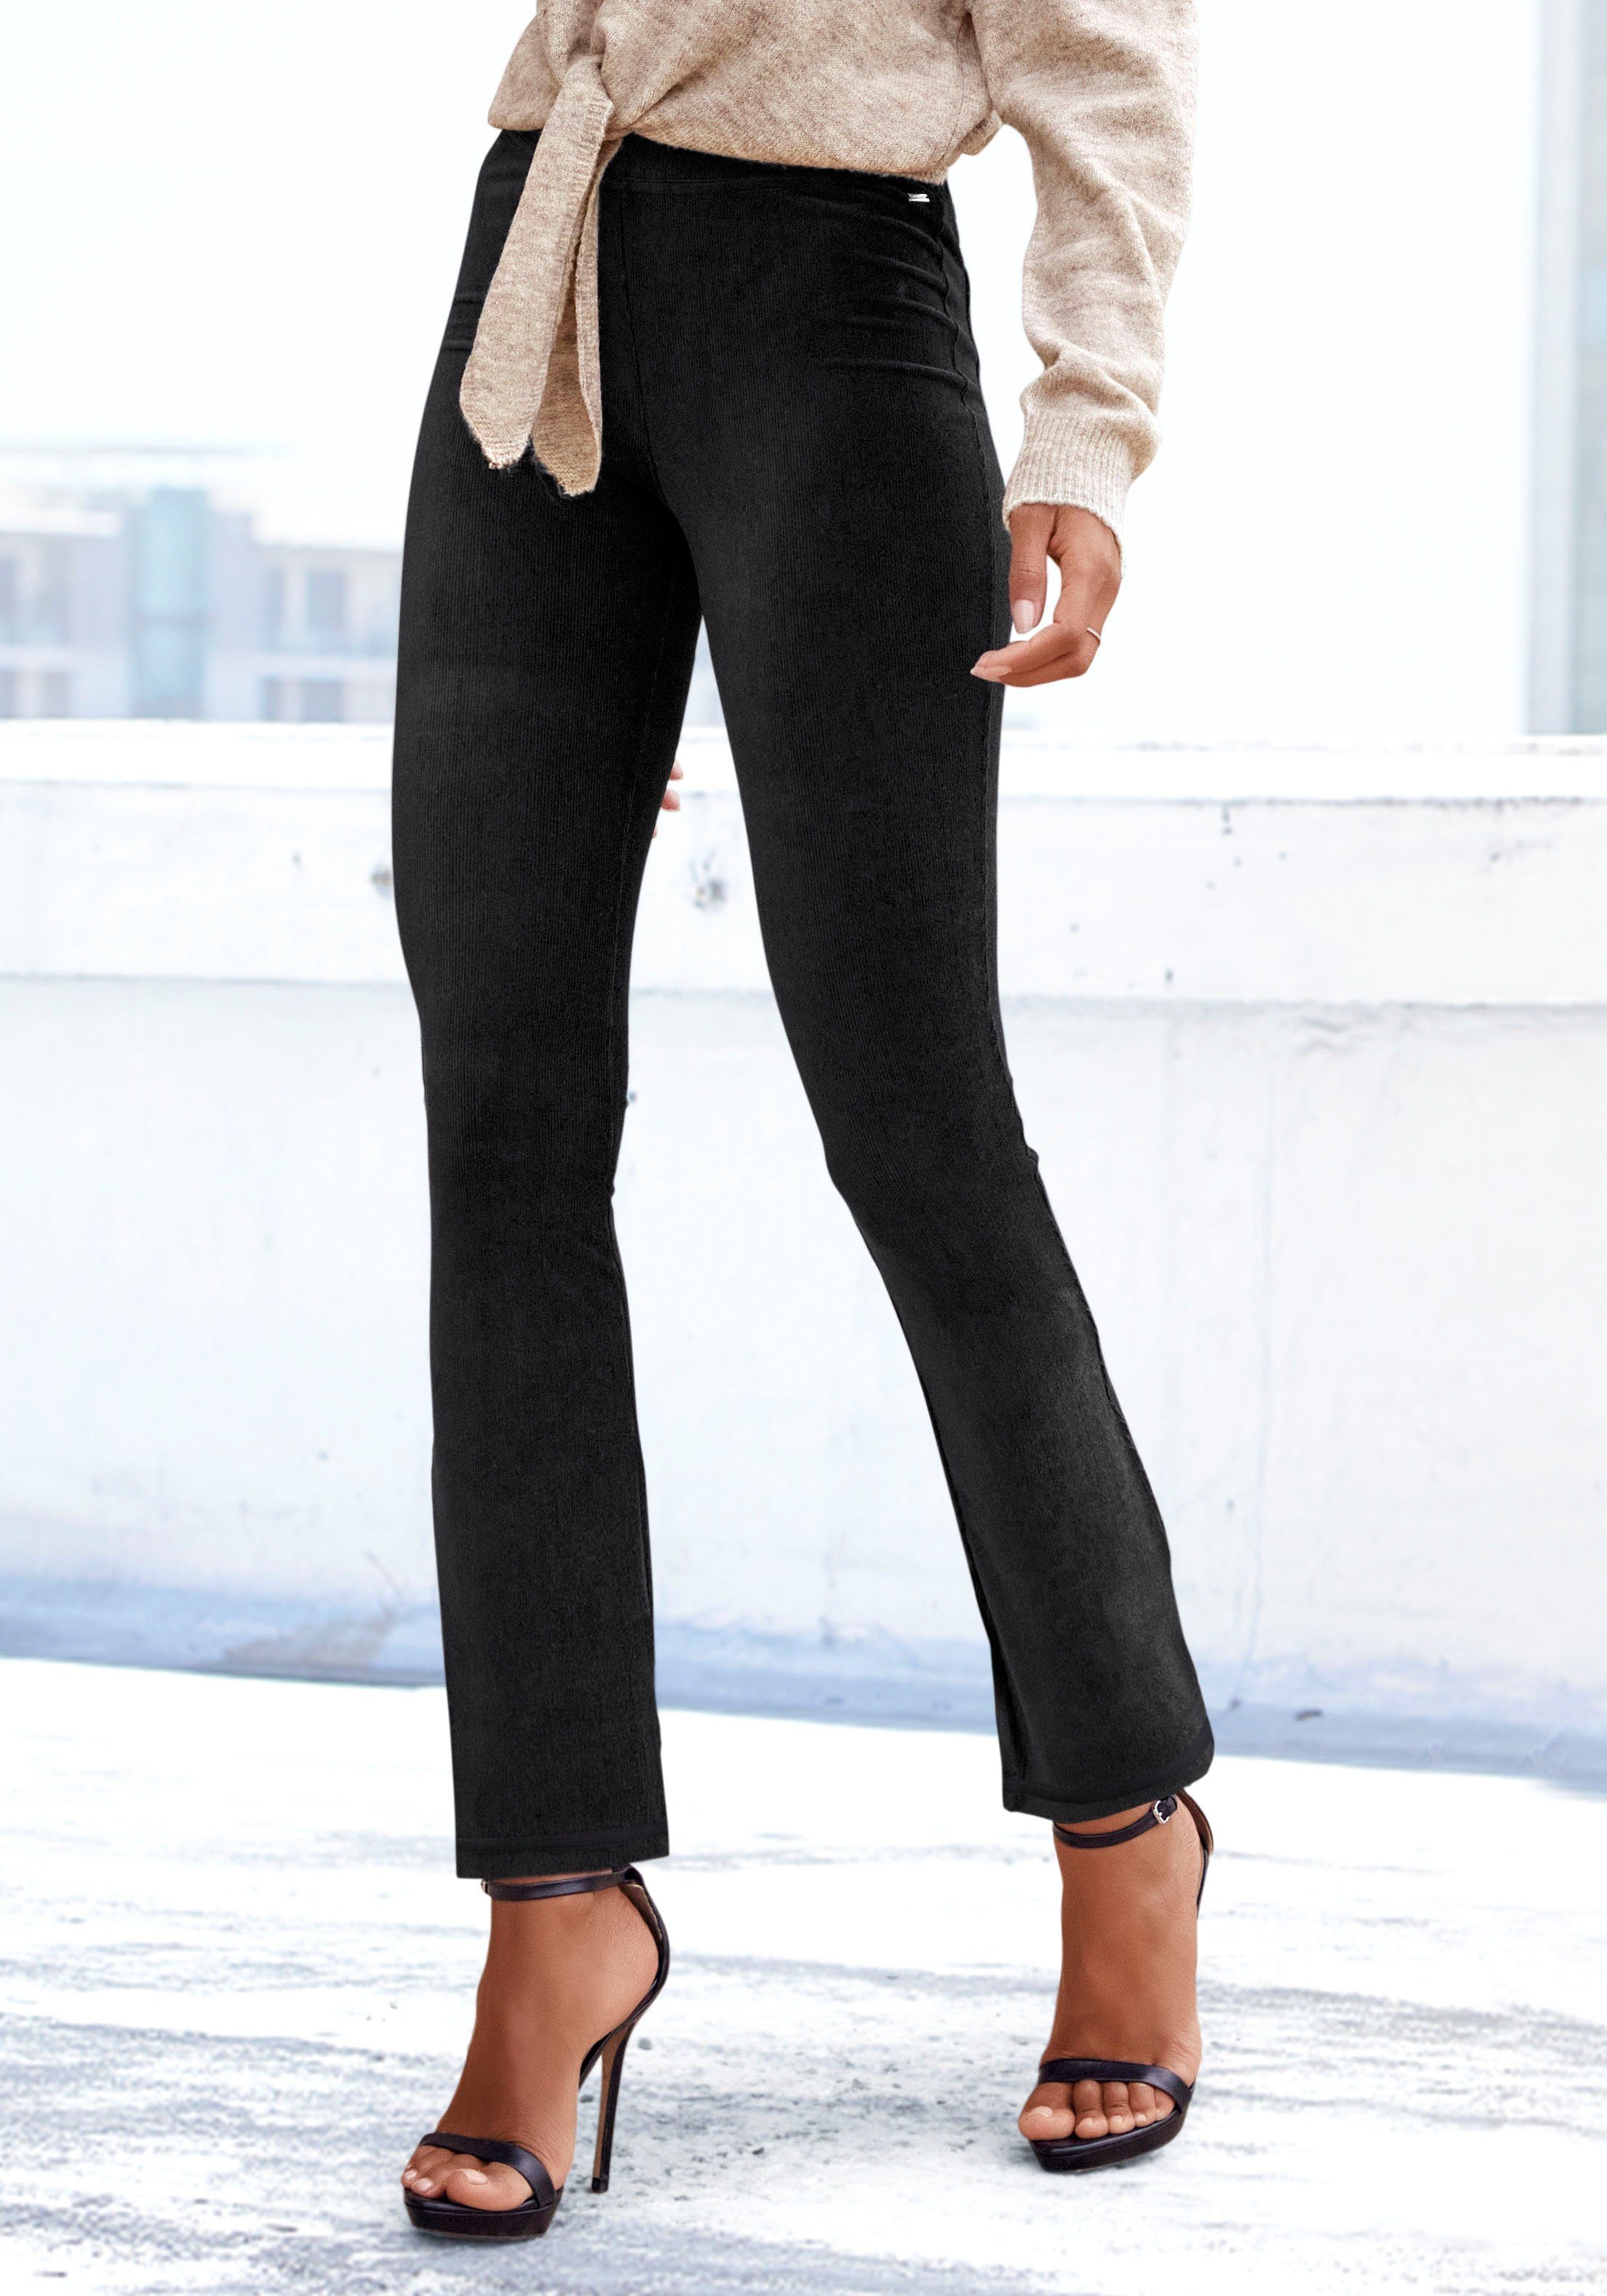 LASCANA Jazzpants Loungewear Material aus weichem schwarz Cord-Optik, in